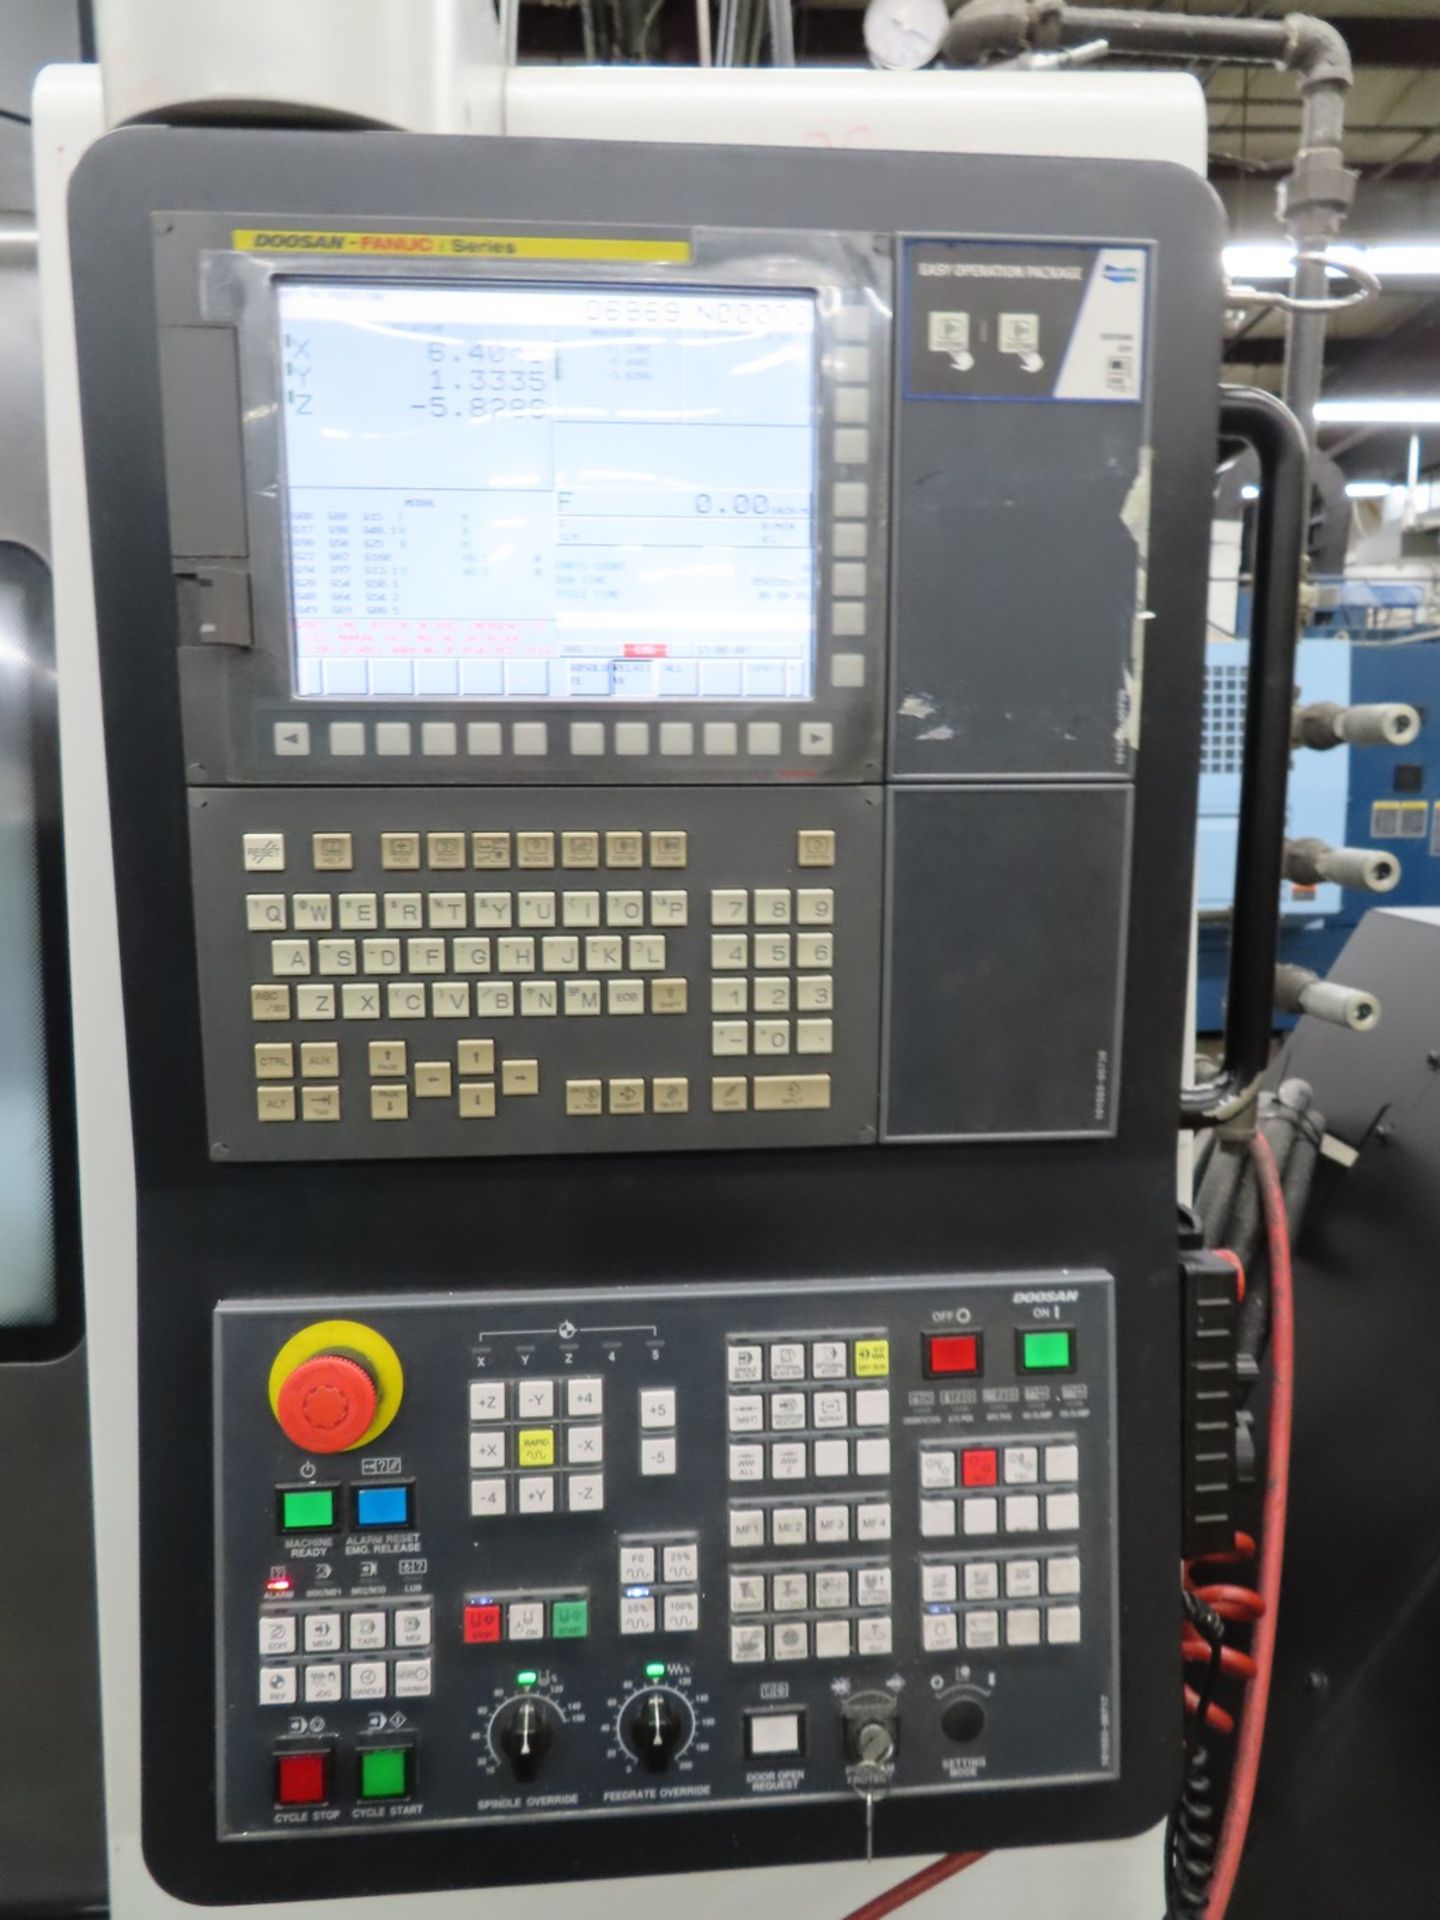 2018 Doosan DNM4500 CNC Vertical Machining Center - Image 4 of 13